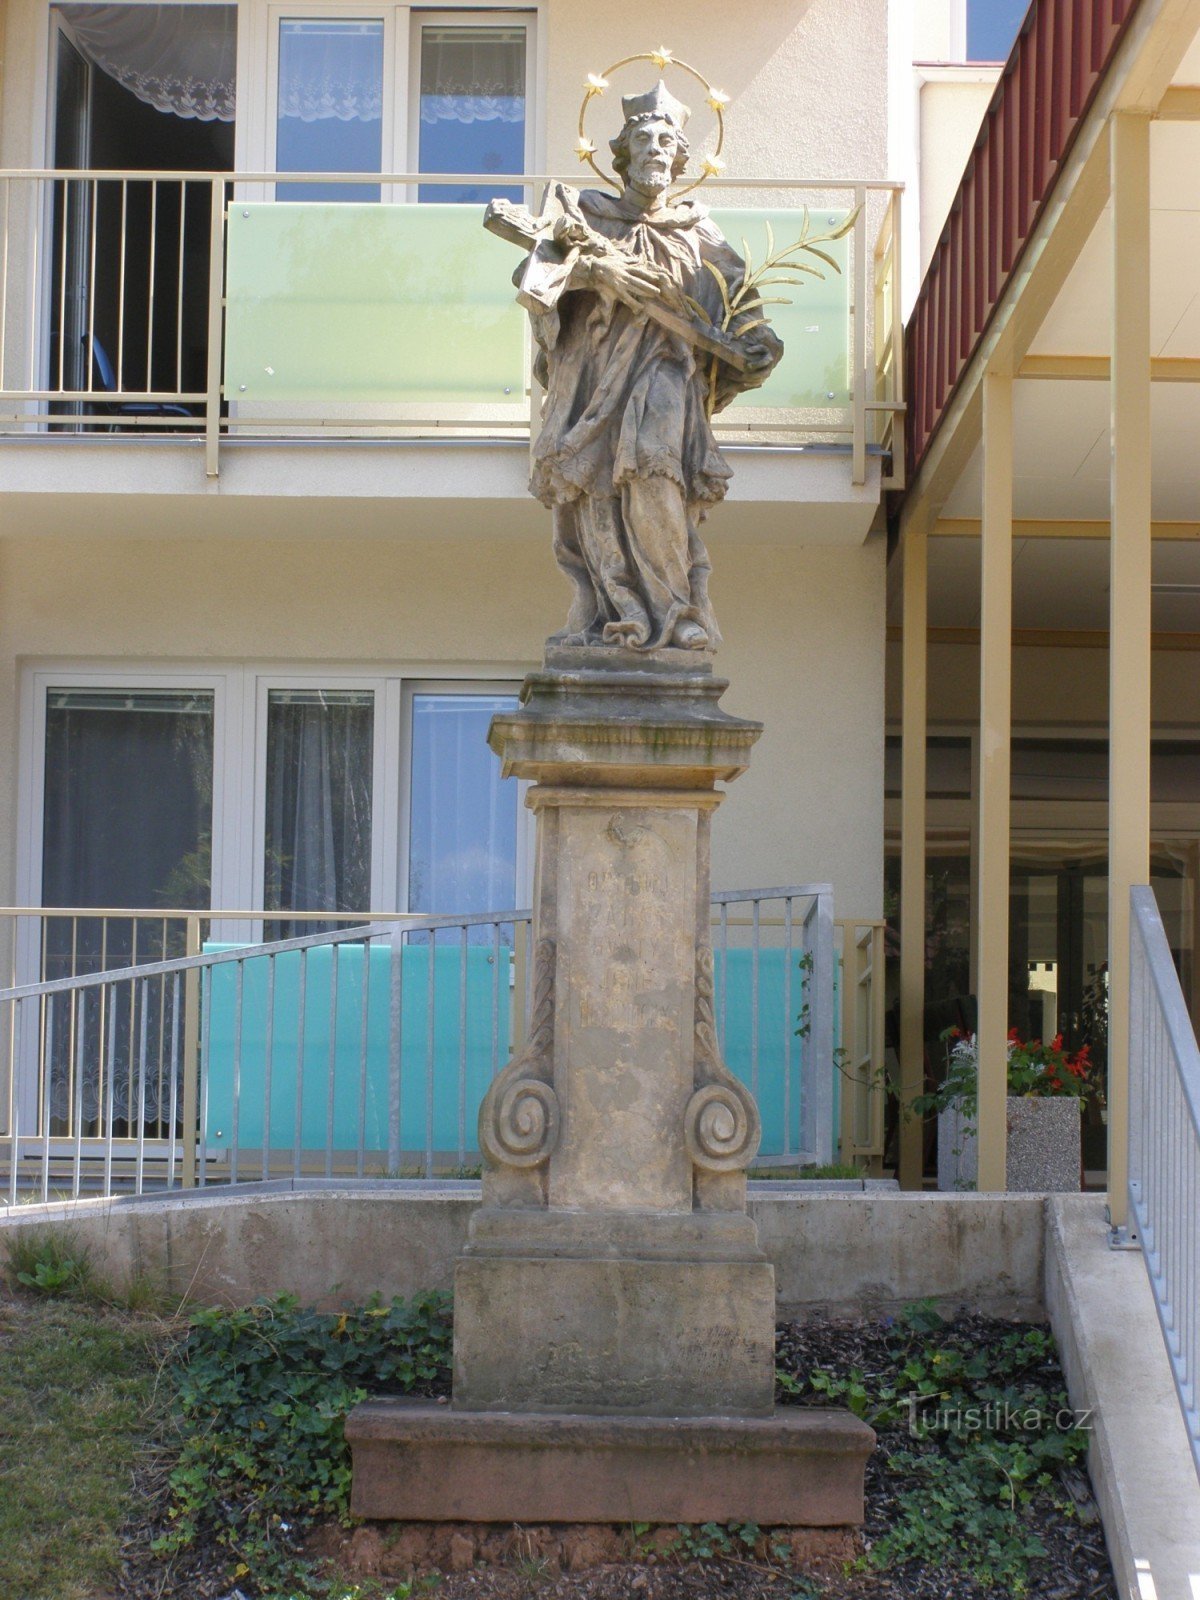 Nová Paka - άγαλμα του Αγίου Ιωάννη του Nepomuk